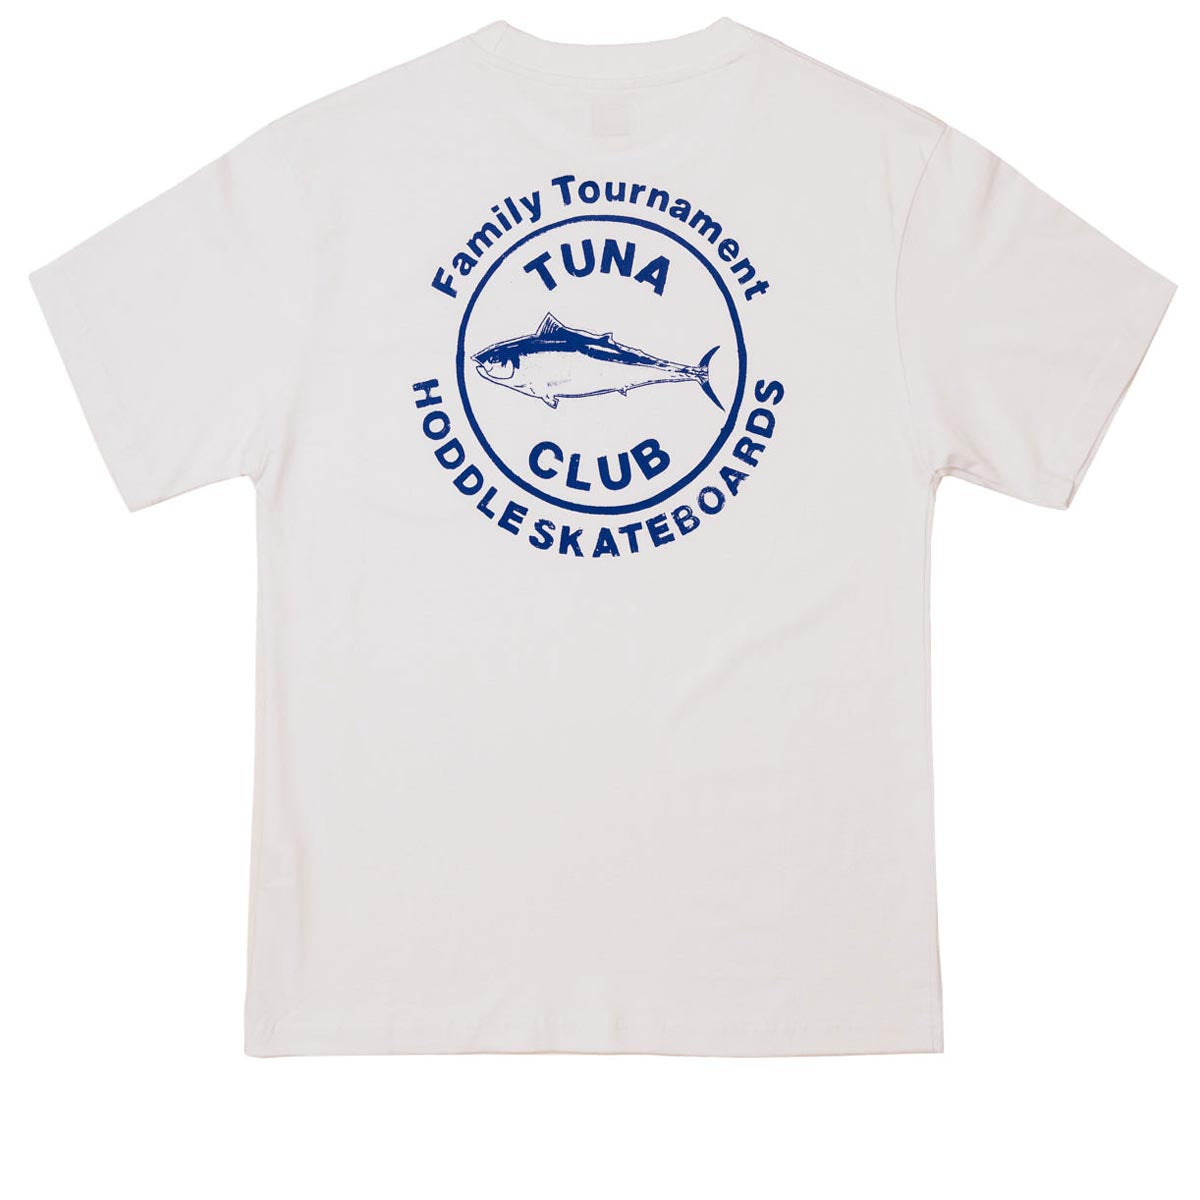 Hoddle Tuna Club T-Shirt - White image 1